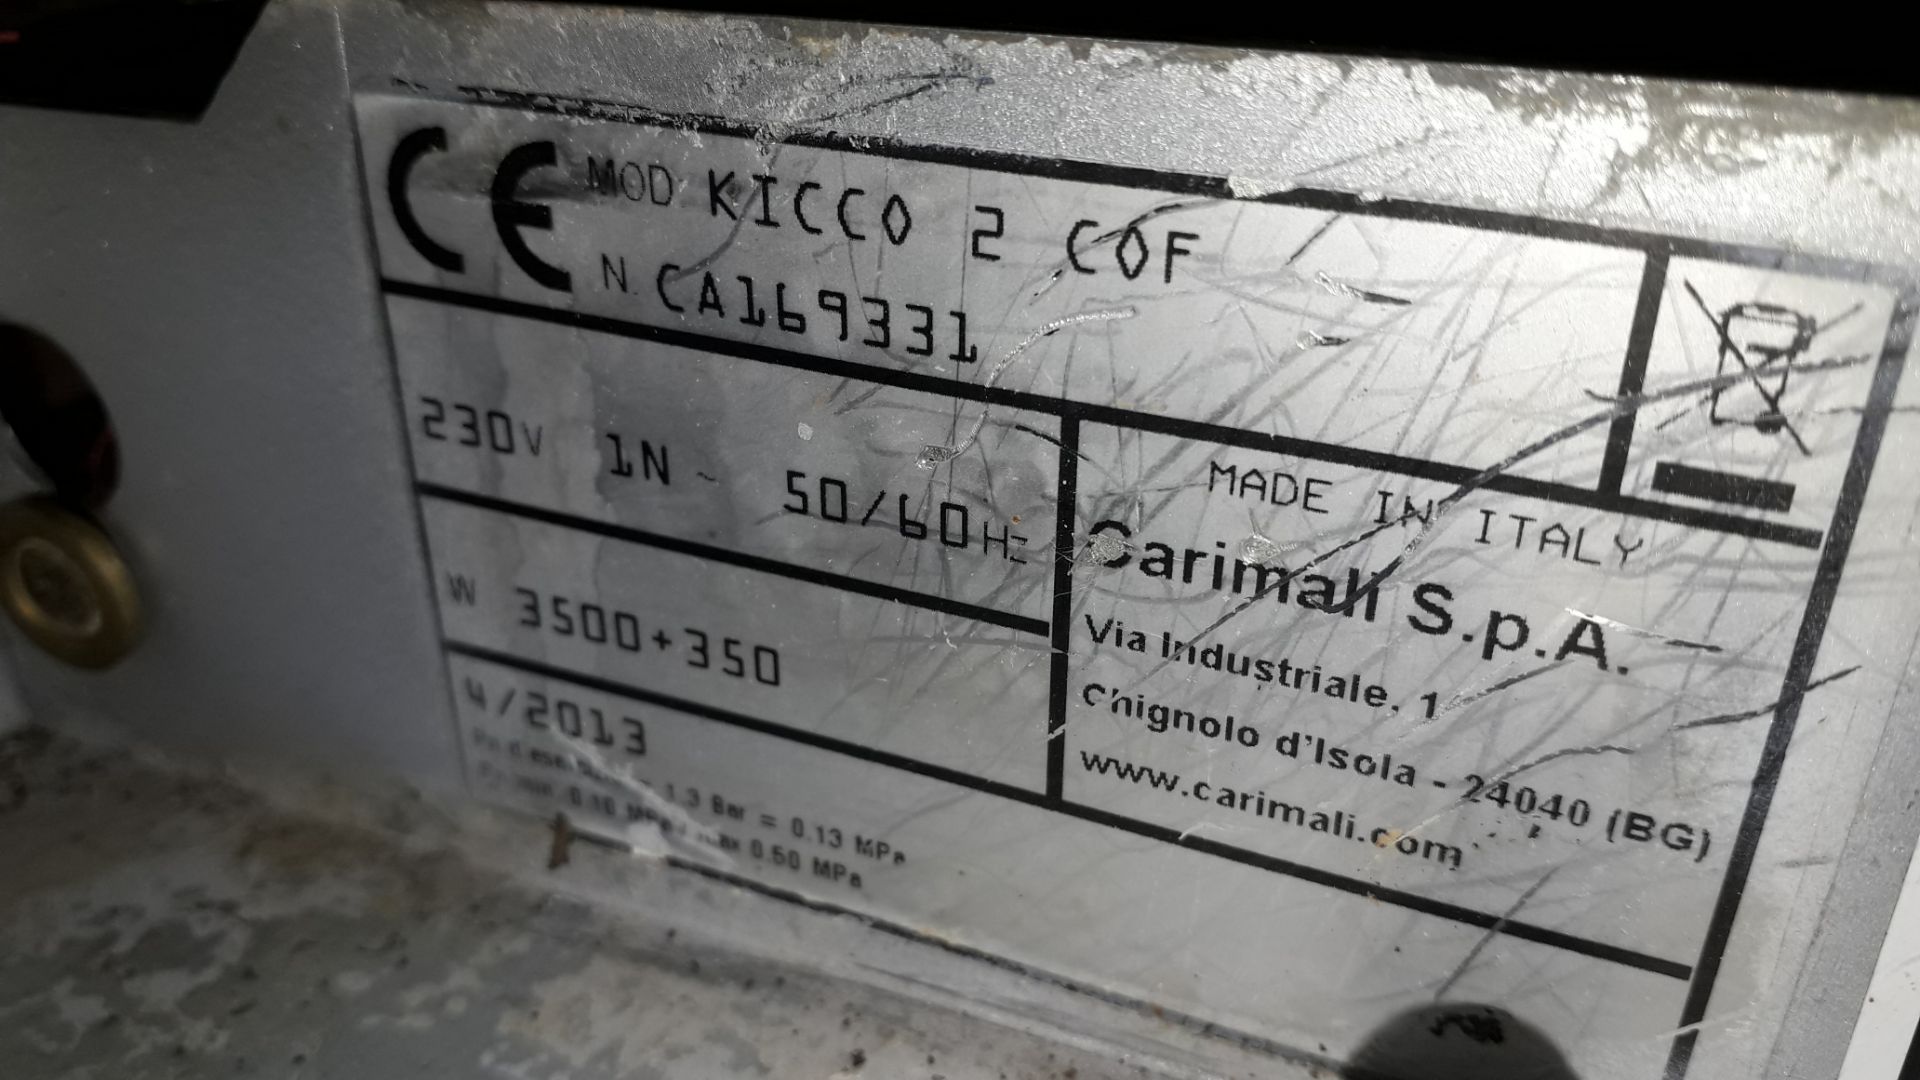 Carimali KICCO 2 Group Espresso Coffee Machine, Serial Machine CA169331 (2013) - Image 3 of 3